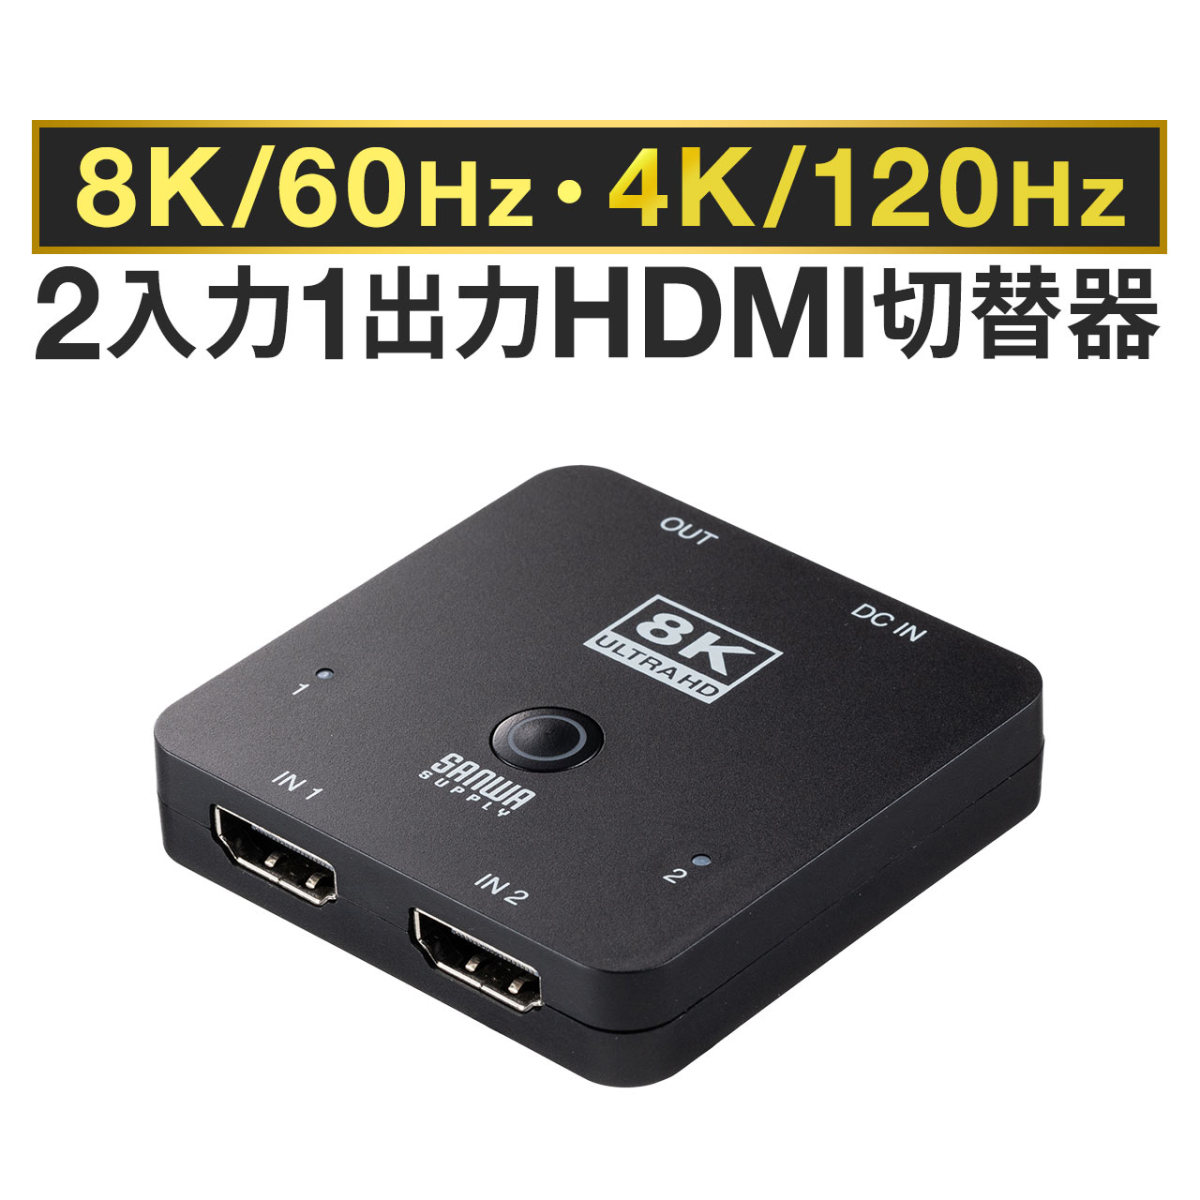 HDMI 切替器 セレクター 2入力1出力 8K/60Hz 4K/120Hz 高画質 自動 手動 切り替え HDR対応 HDCP2.3 HDMIセレクター PS5対応 小型 400-SW040